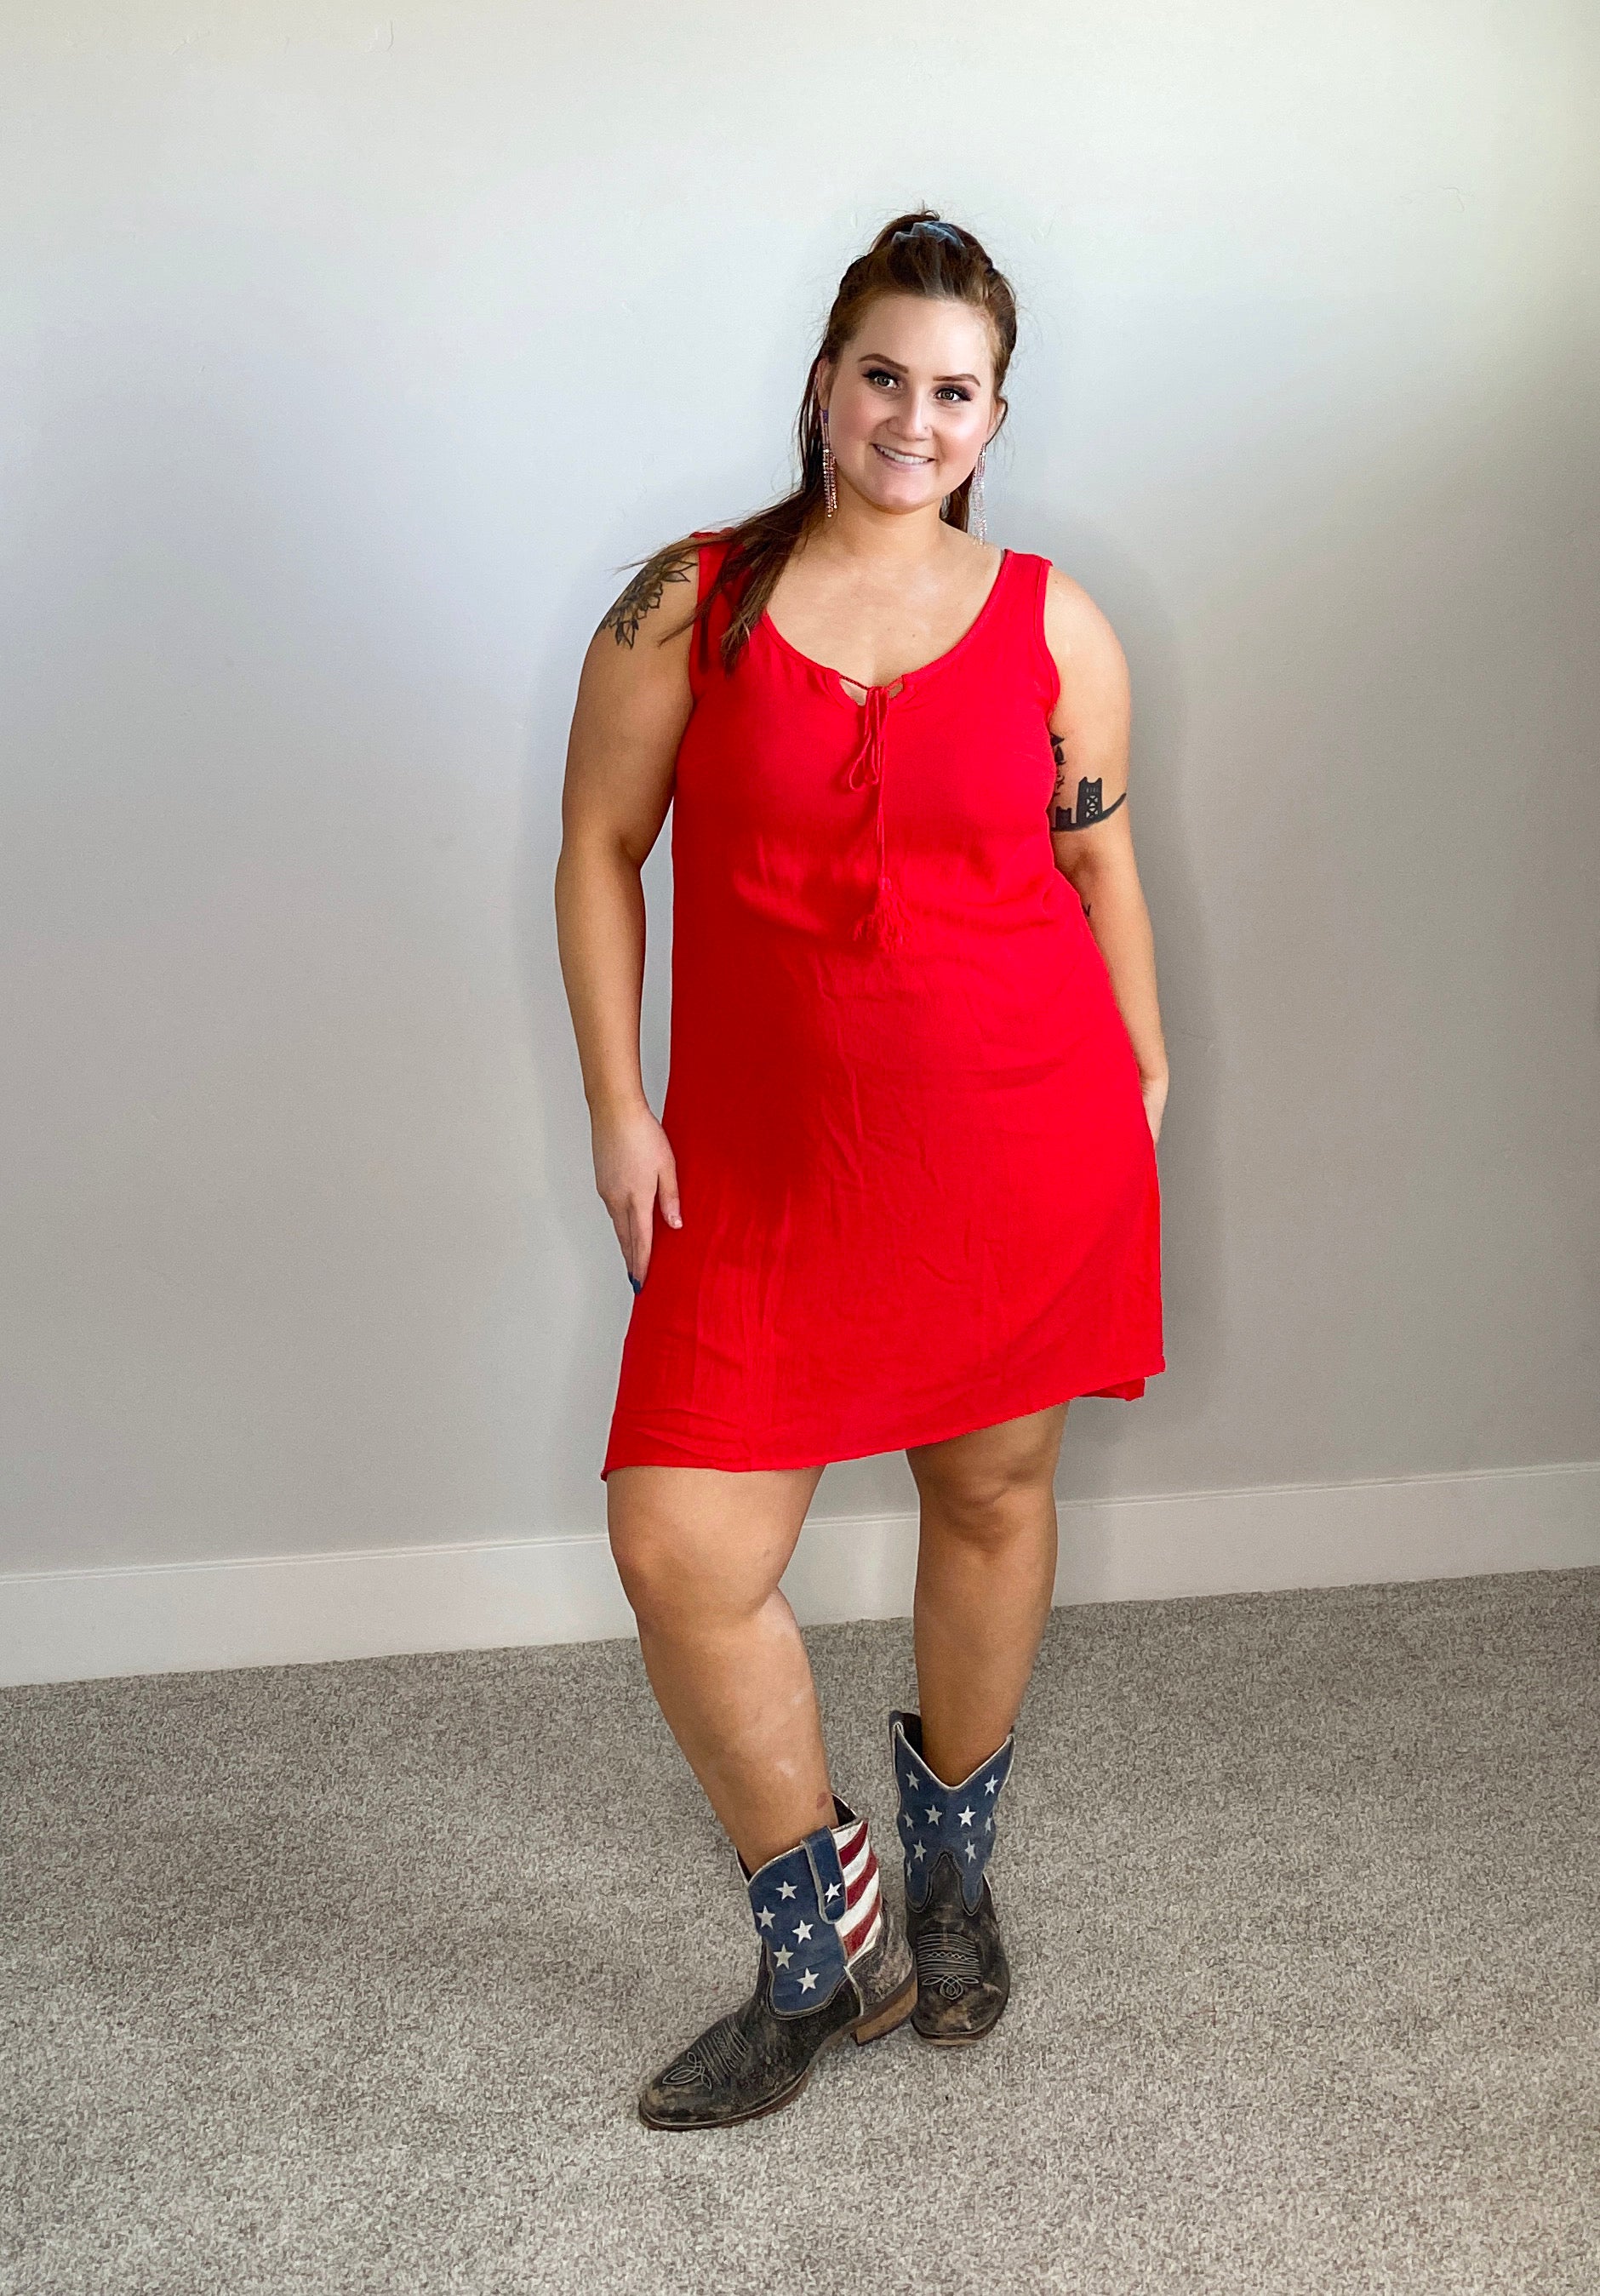 The Mina Red Tank Dress